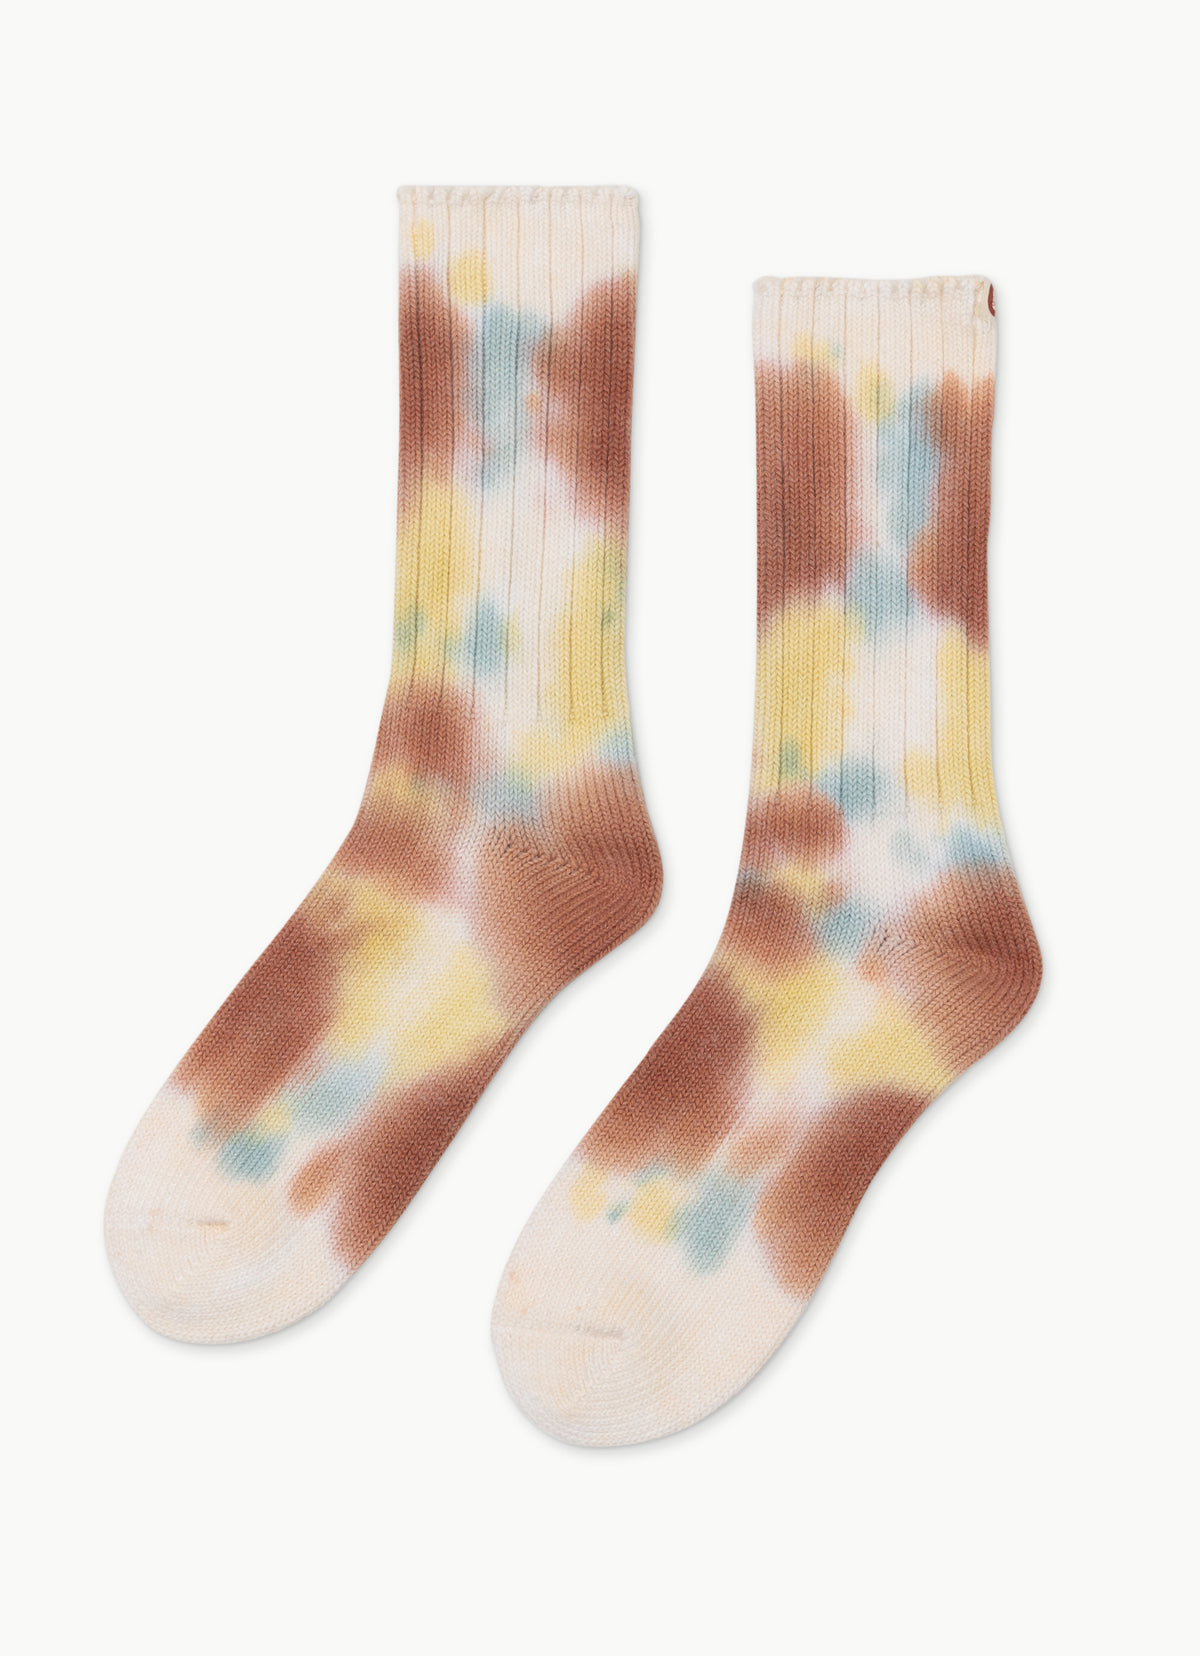 Bulky Rib ankle socks_dyed_Multi